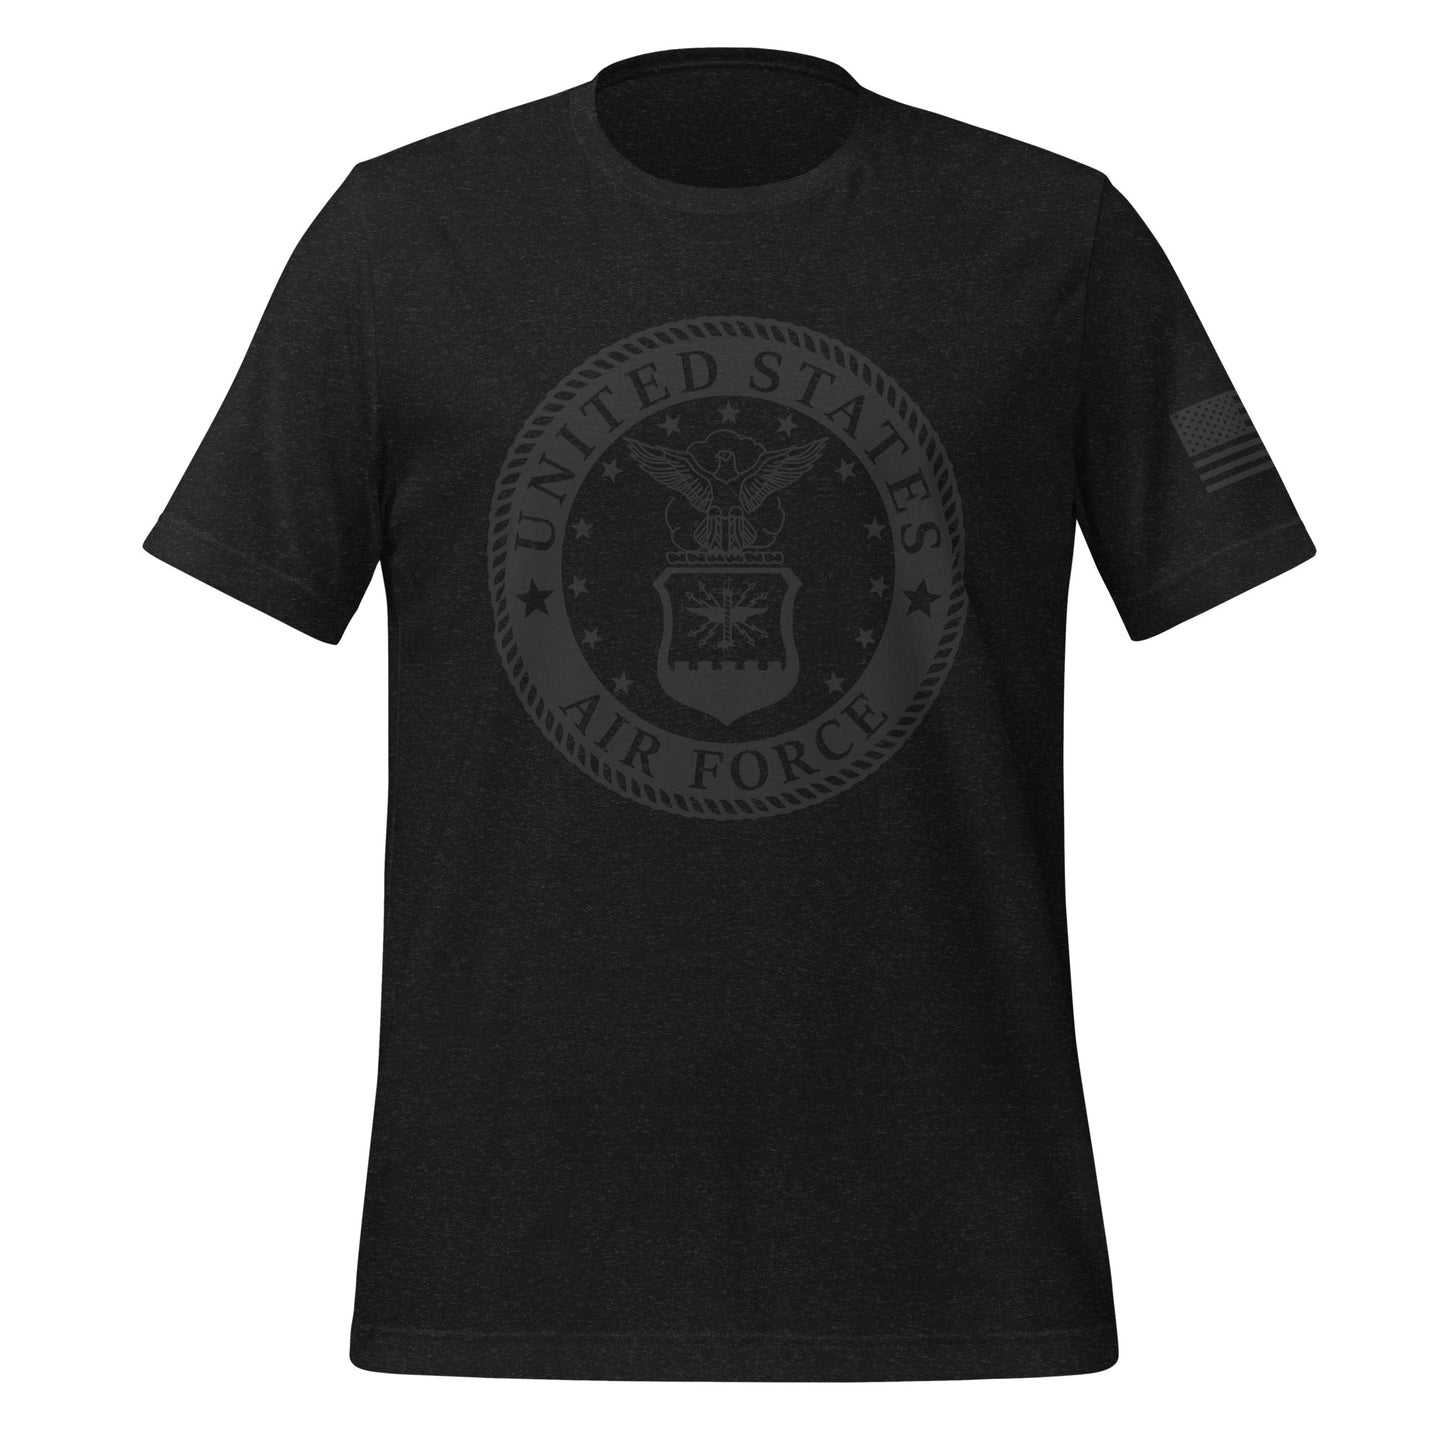 Unisex t-shirt - U.S. Air Force